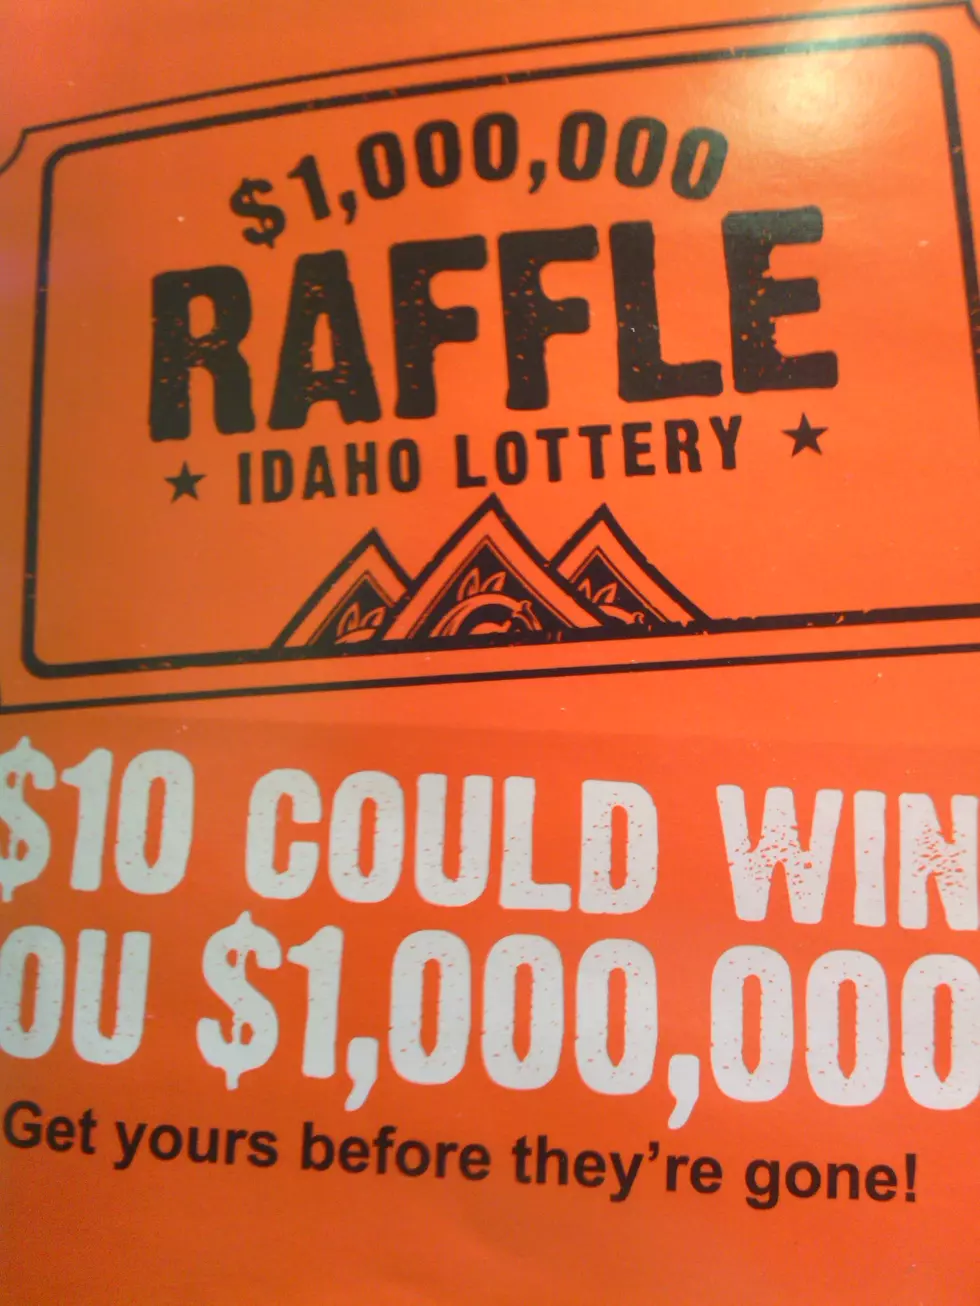 Idaho Lottery $1 Million Raffle Sold Out